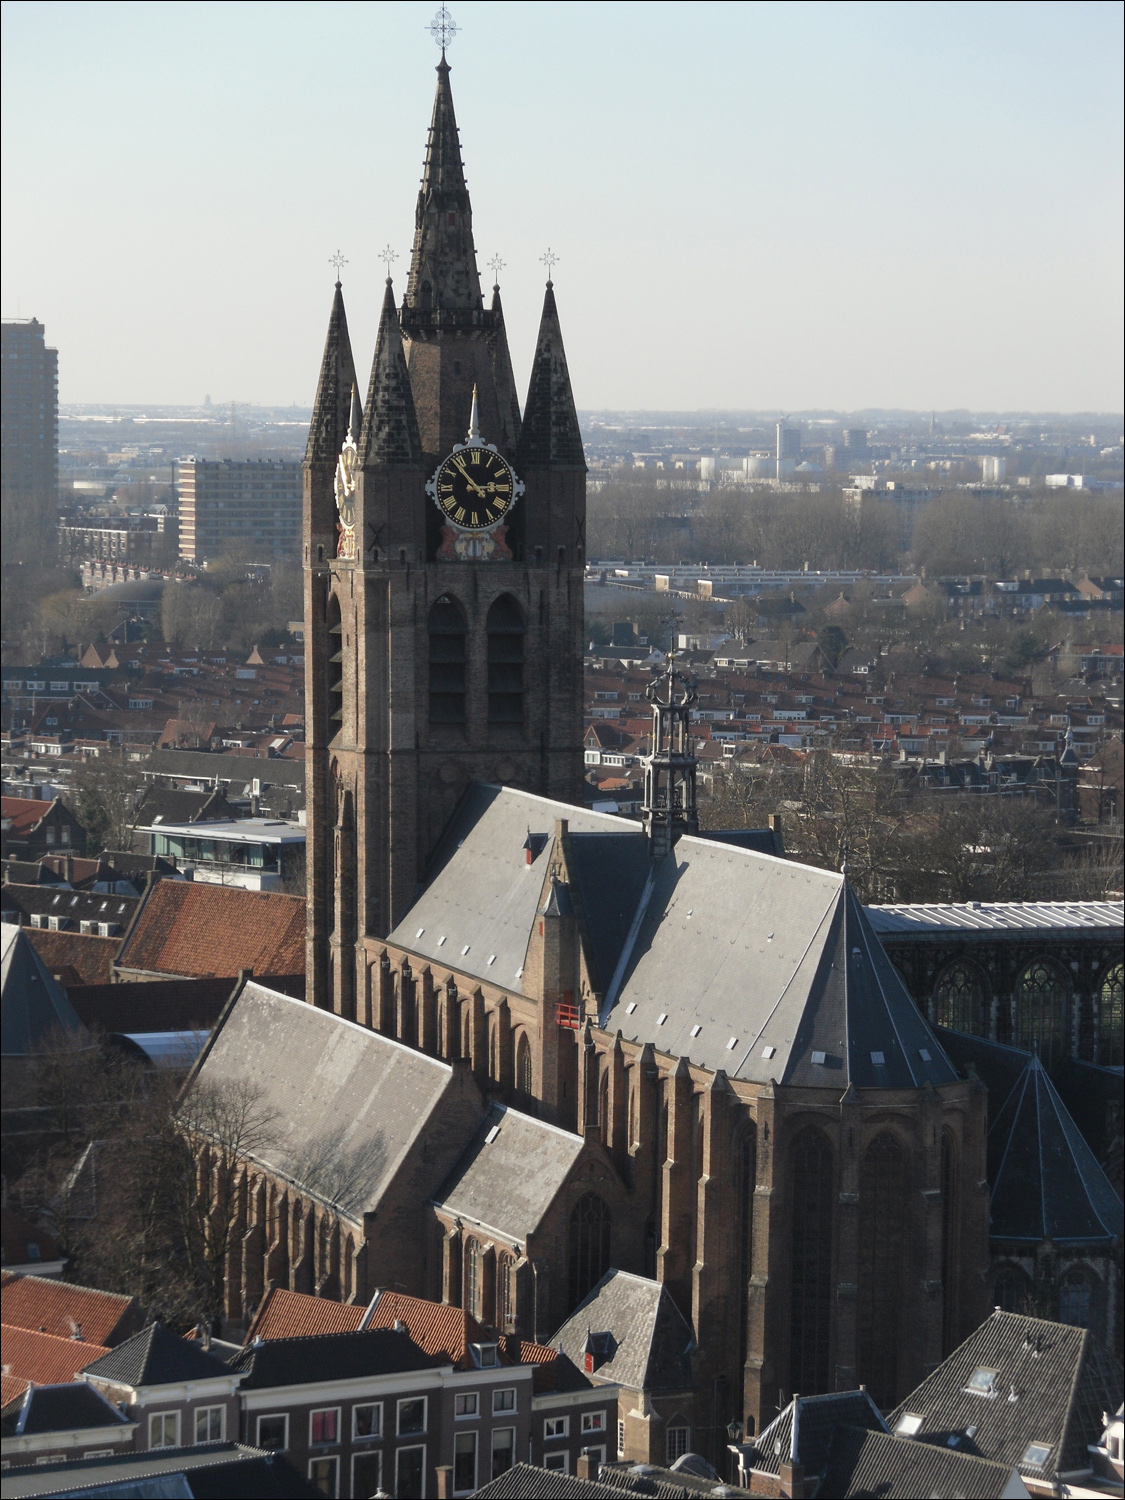 Views from the top of the clock tower on Nieuwe Kerk- View of Oude Kerk (Old Church)